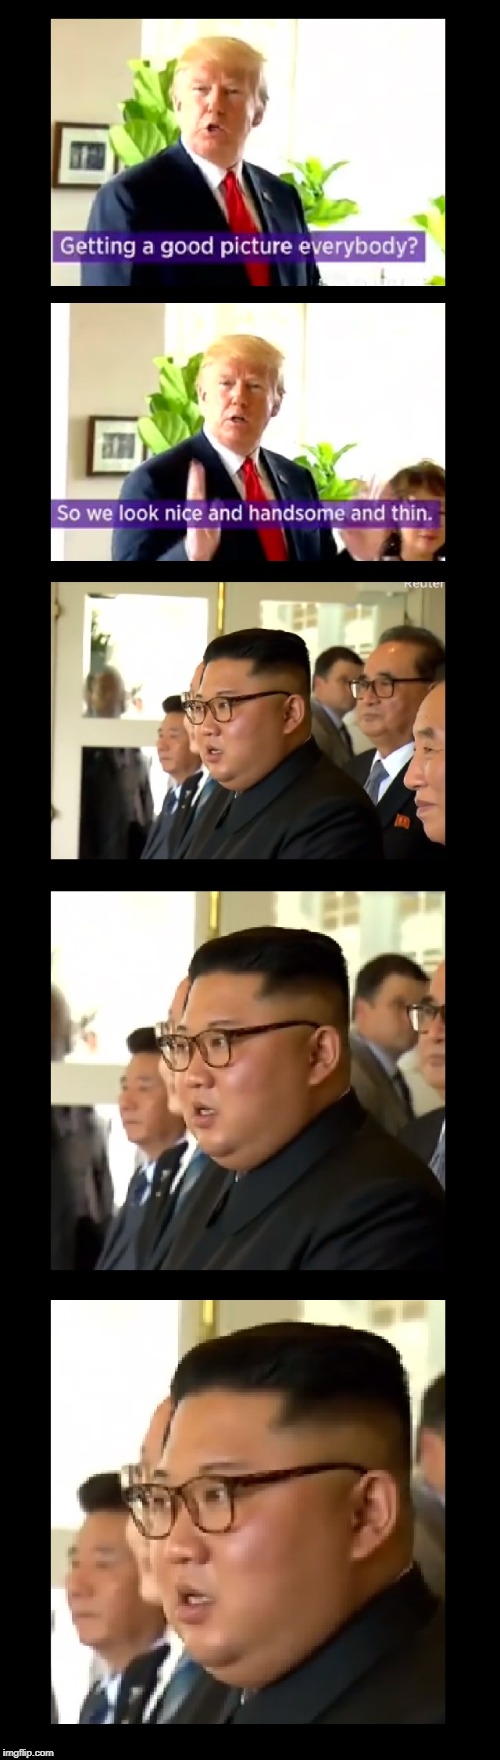 Actual quote at the Trump and Kim Jong Un meetings | . | image tagged in funny memes,trump,kim jong un,politics,north korea,potus | made w/ Imgflip meme maker